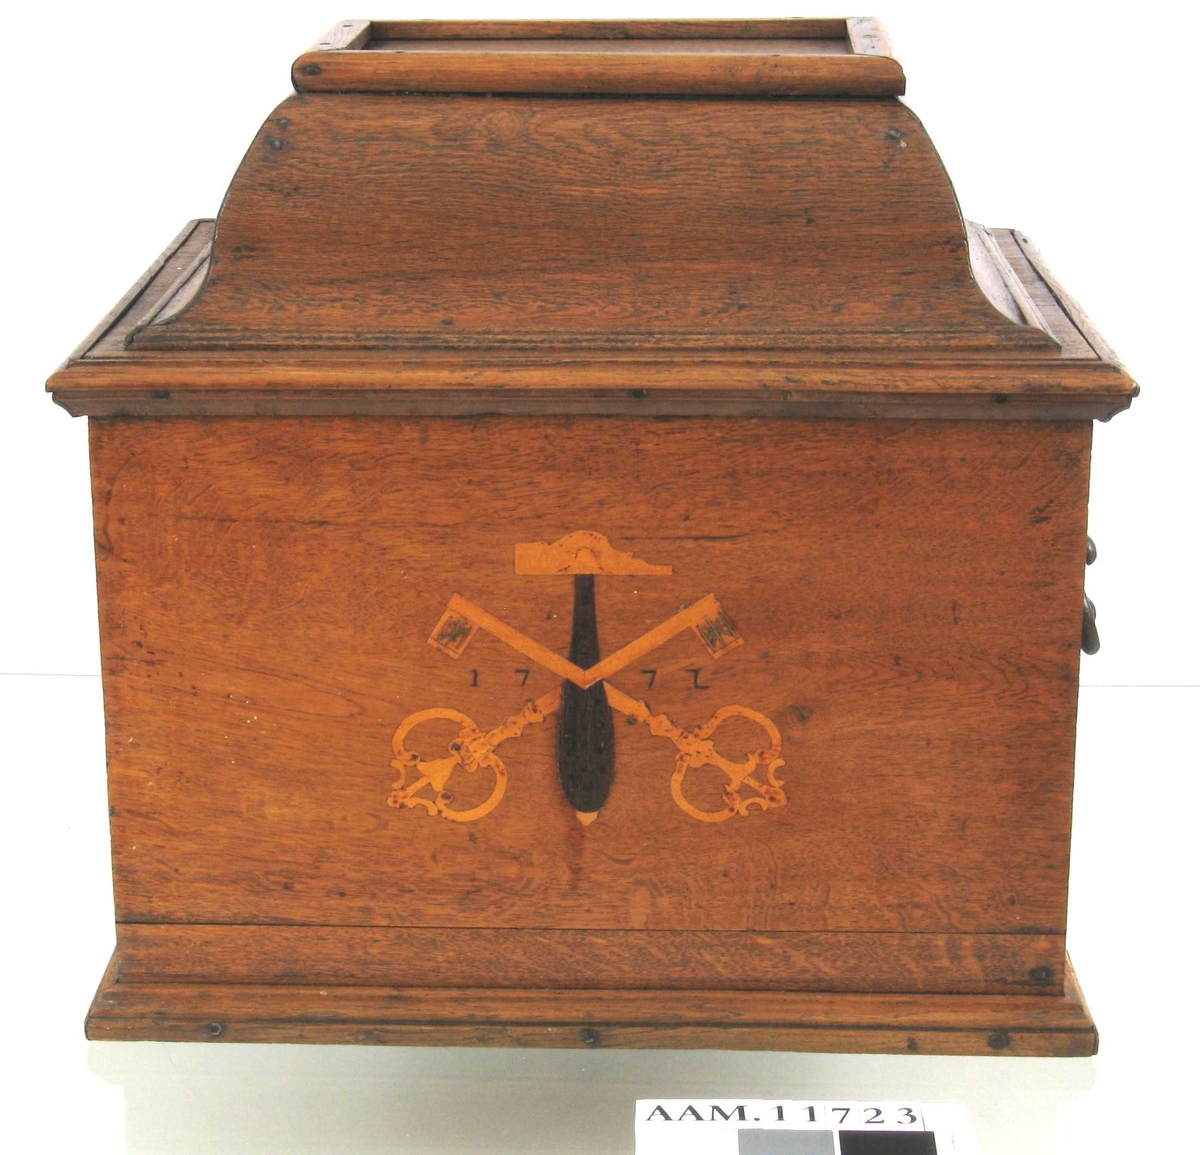 På skrinets forside en hammer med to korslagte nøkler i intarsia og  årstallet 1772.